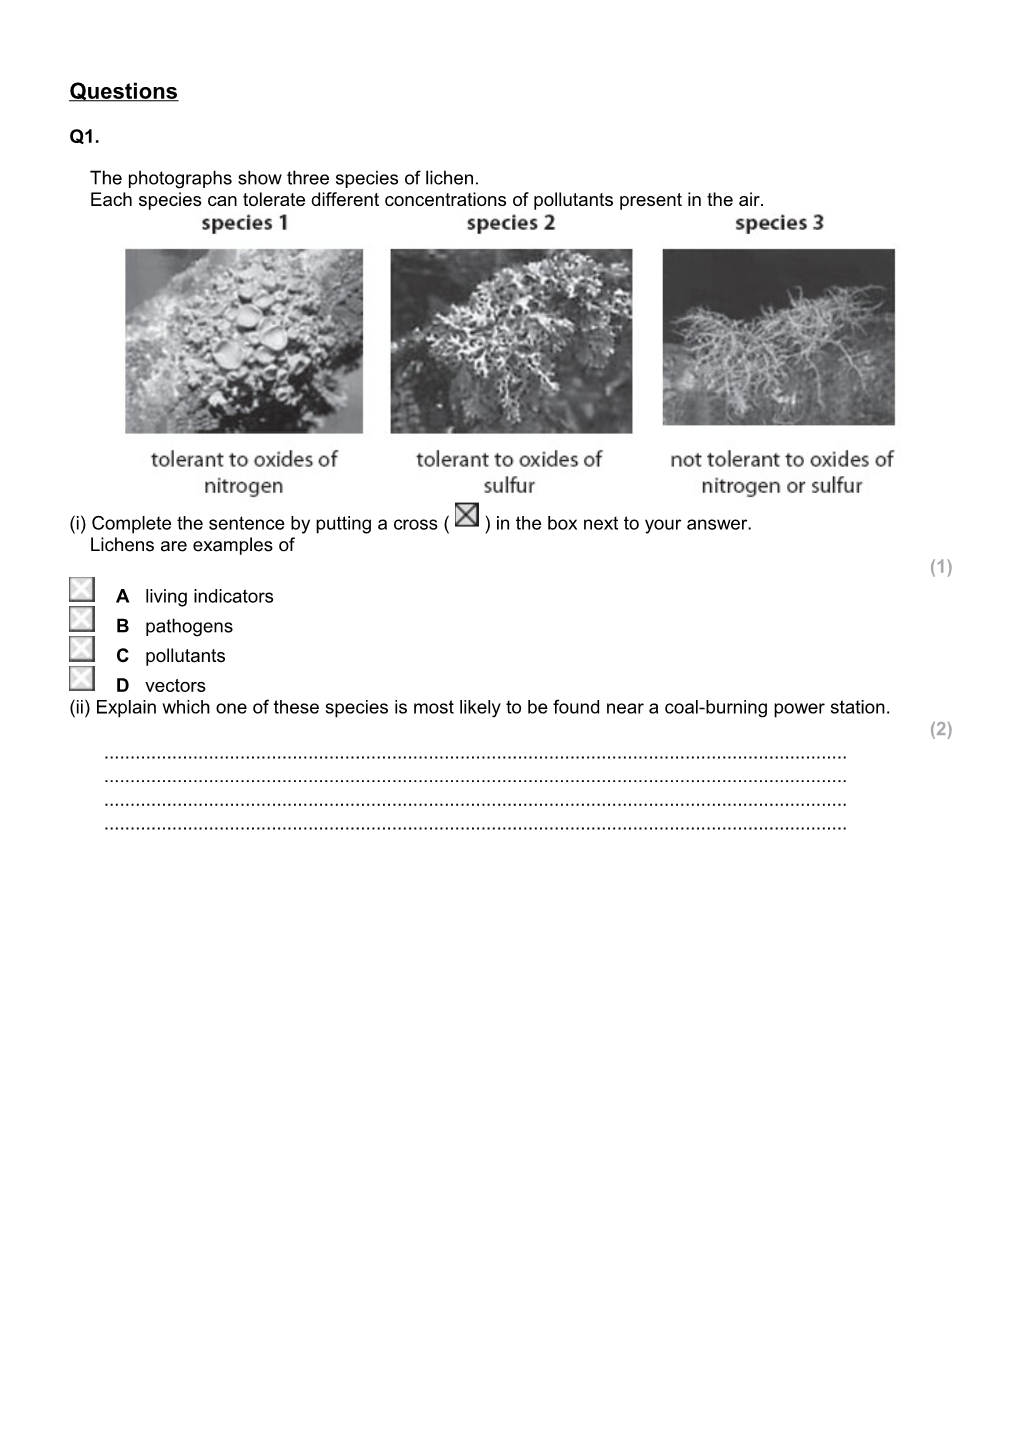 The Photographs Show Three Species of Lichen